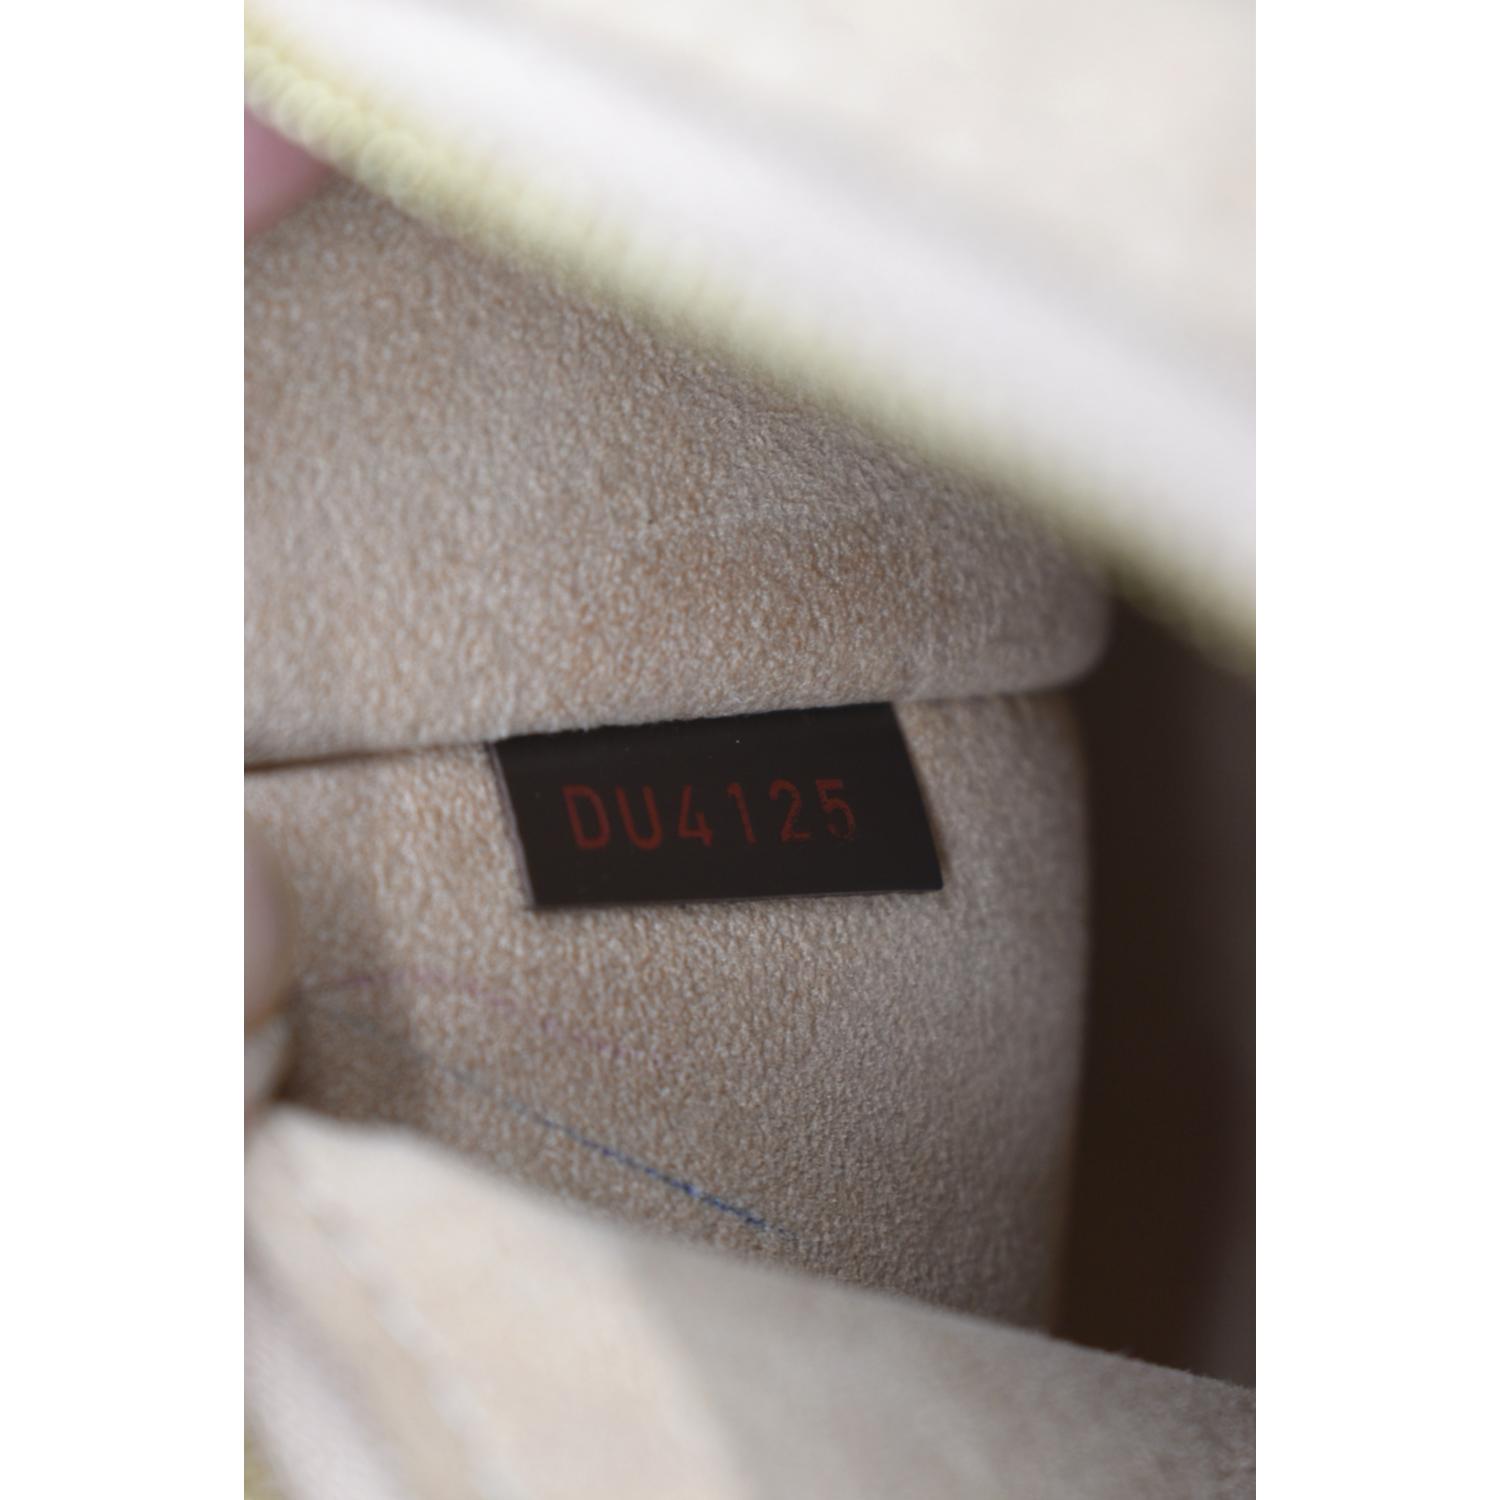 Louis Vuitton Kensington Damier Ebene 'V' Tote Bag Reference Guide